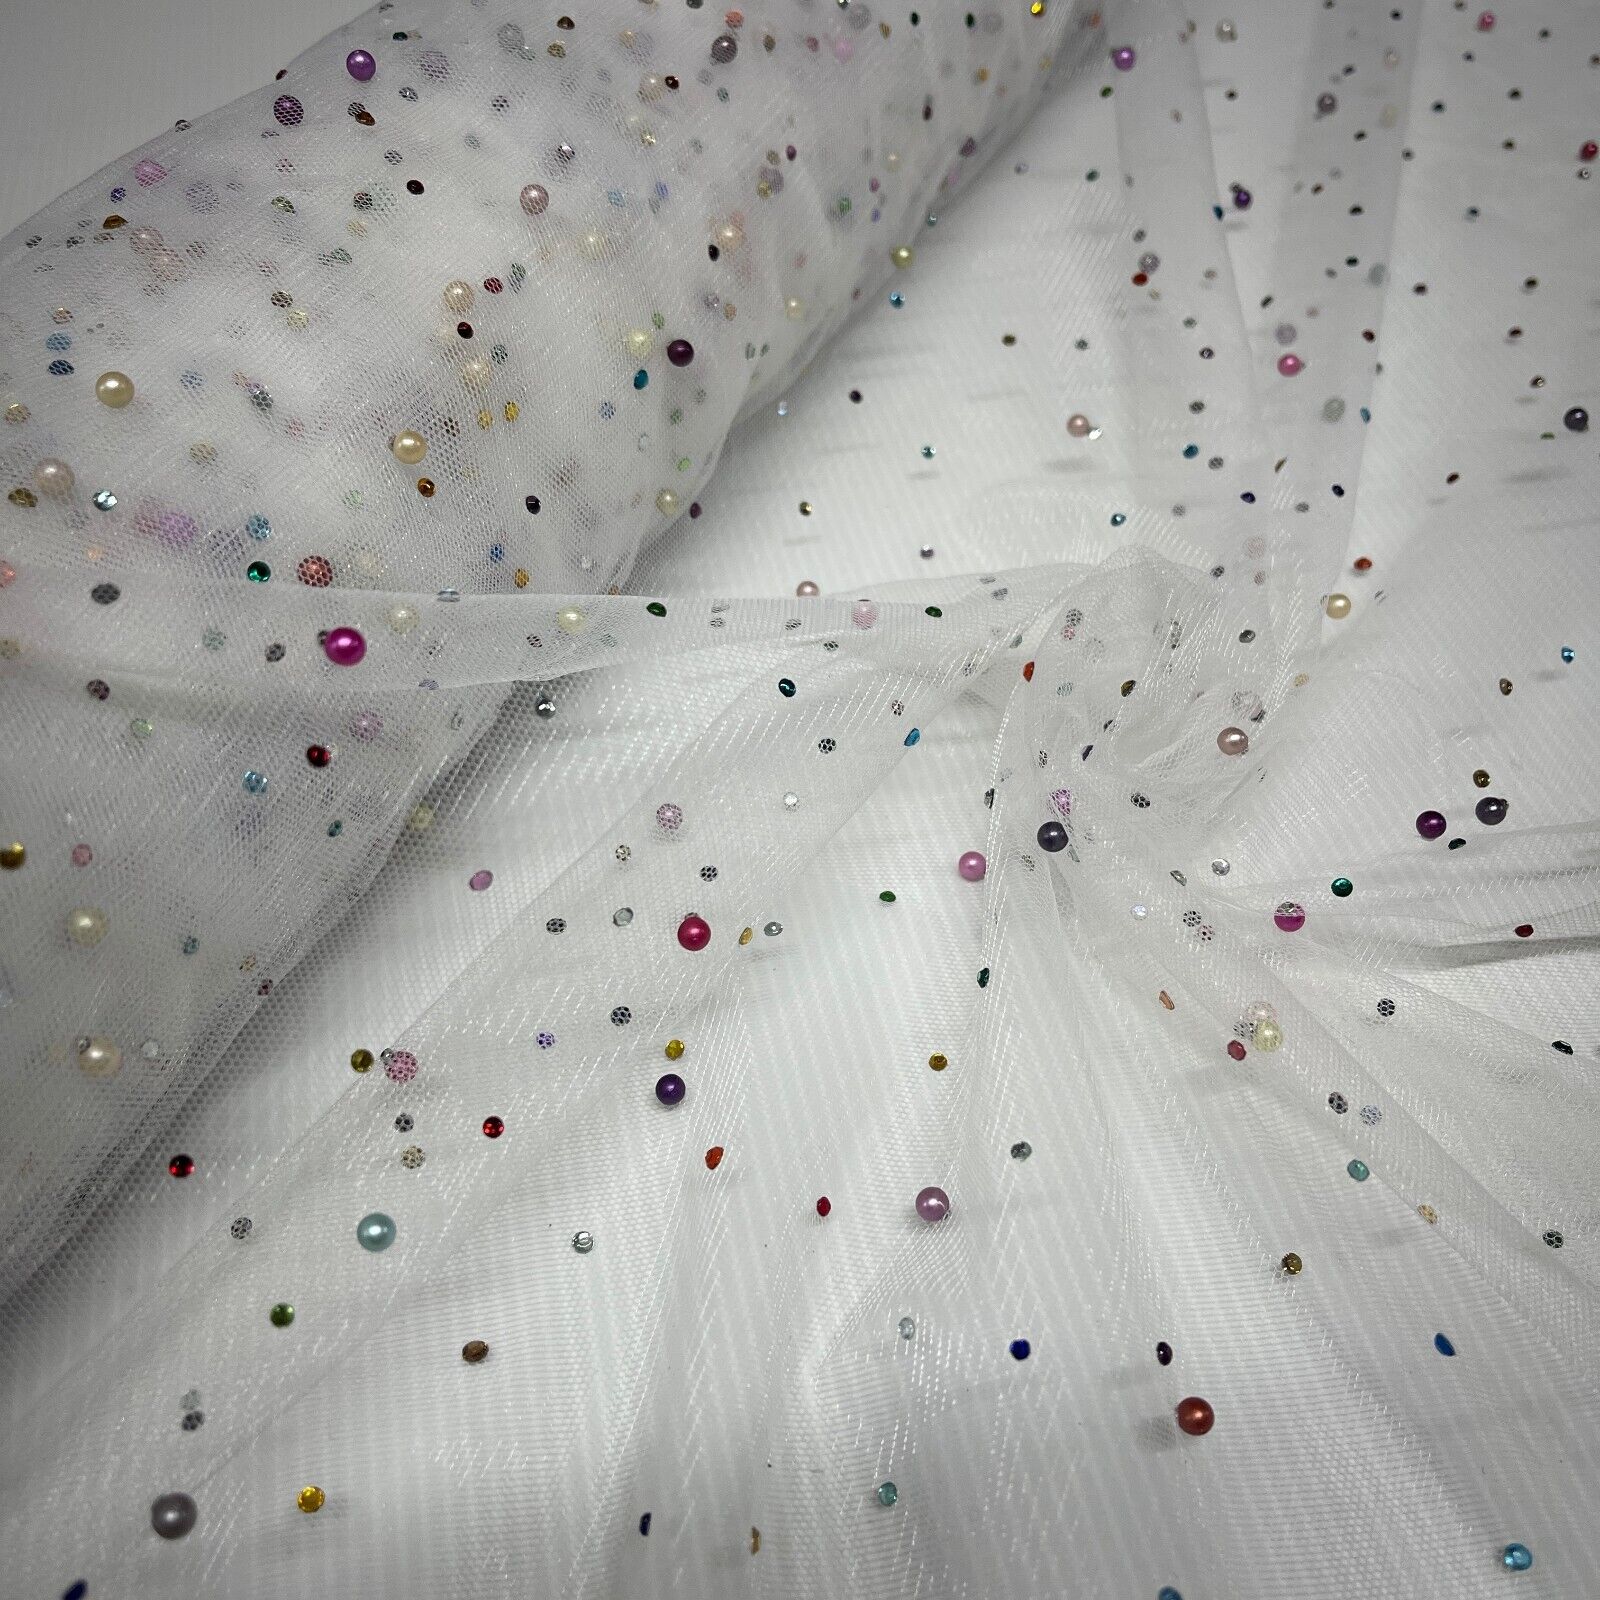 Beaded Pearl rhine stone Tulle Net Dress Wedding Décor Fabric M1825 Mtex